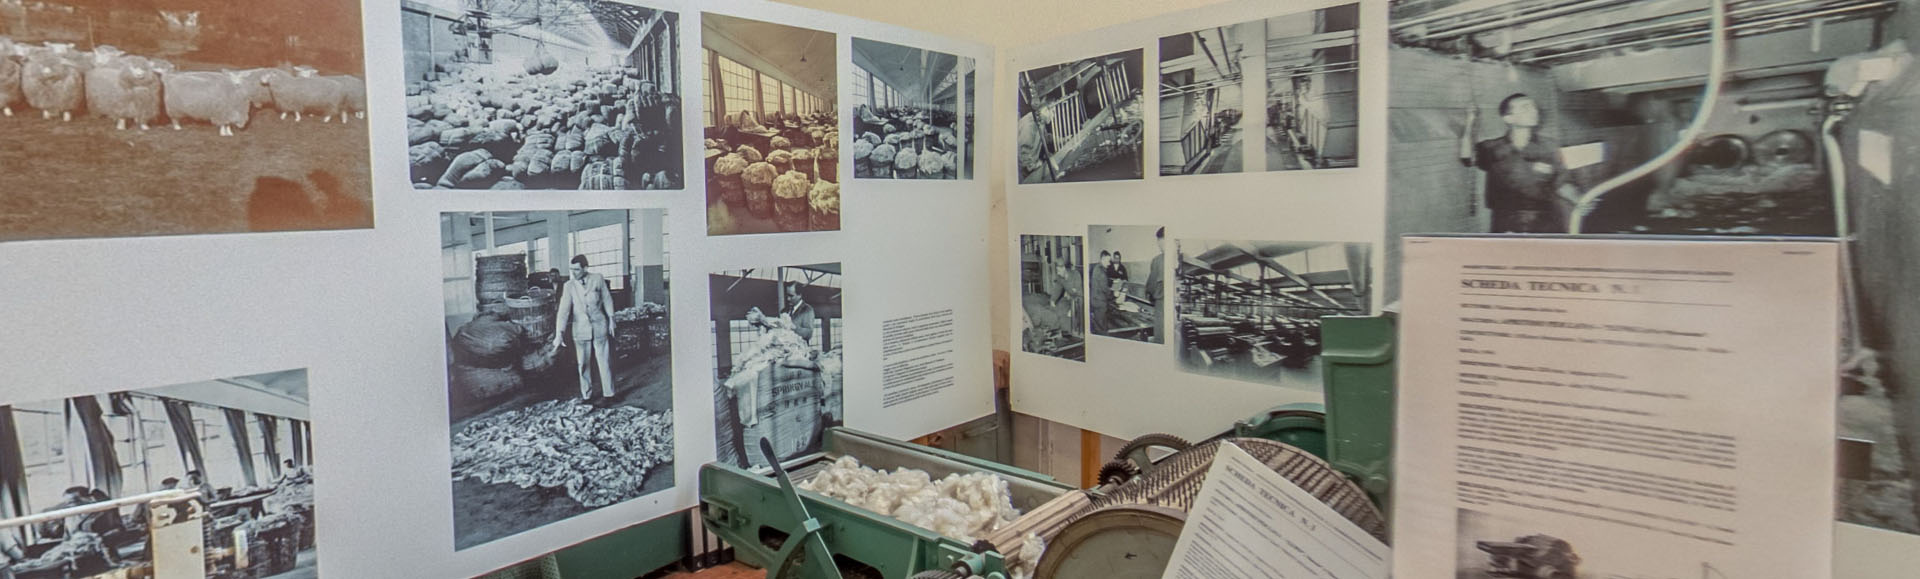 Textilmaschinenmuseum (MUMAT)